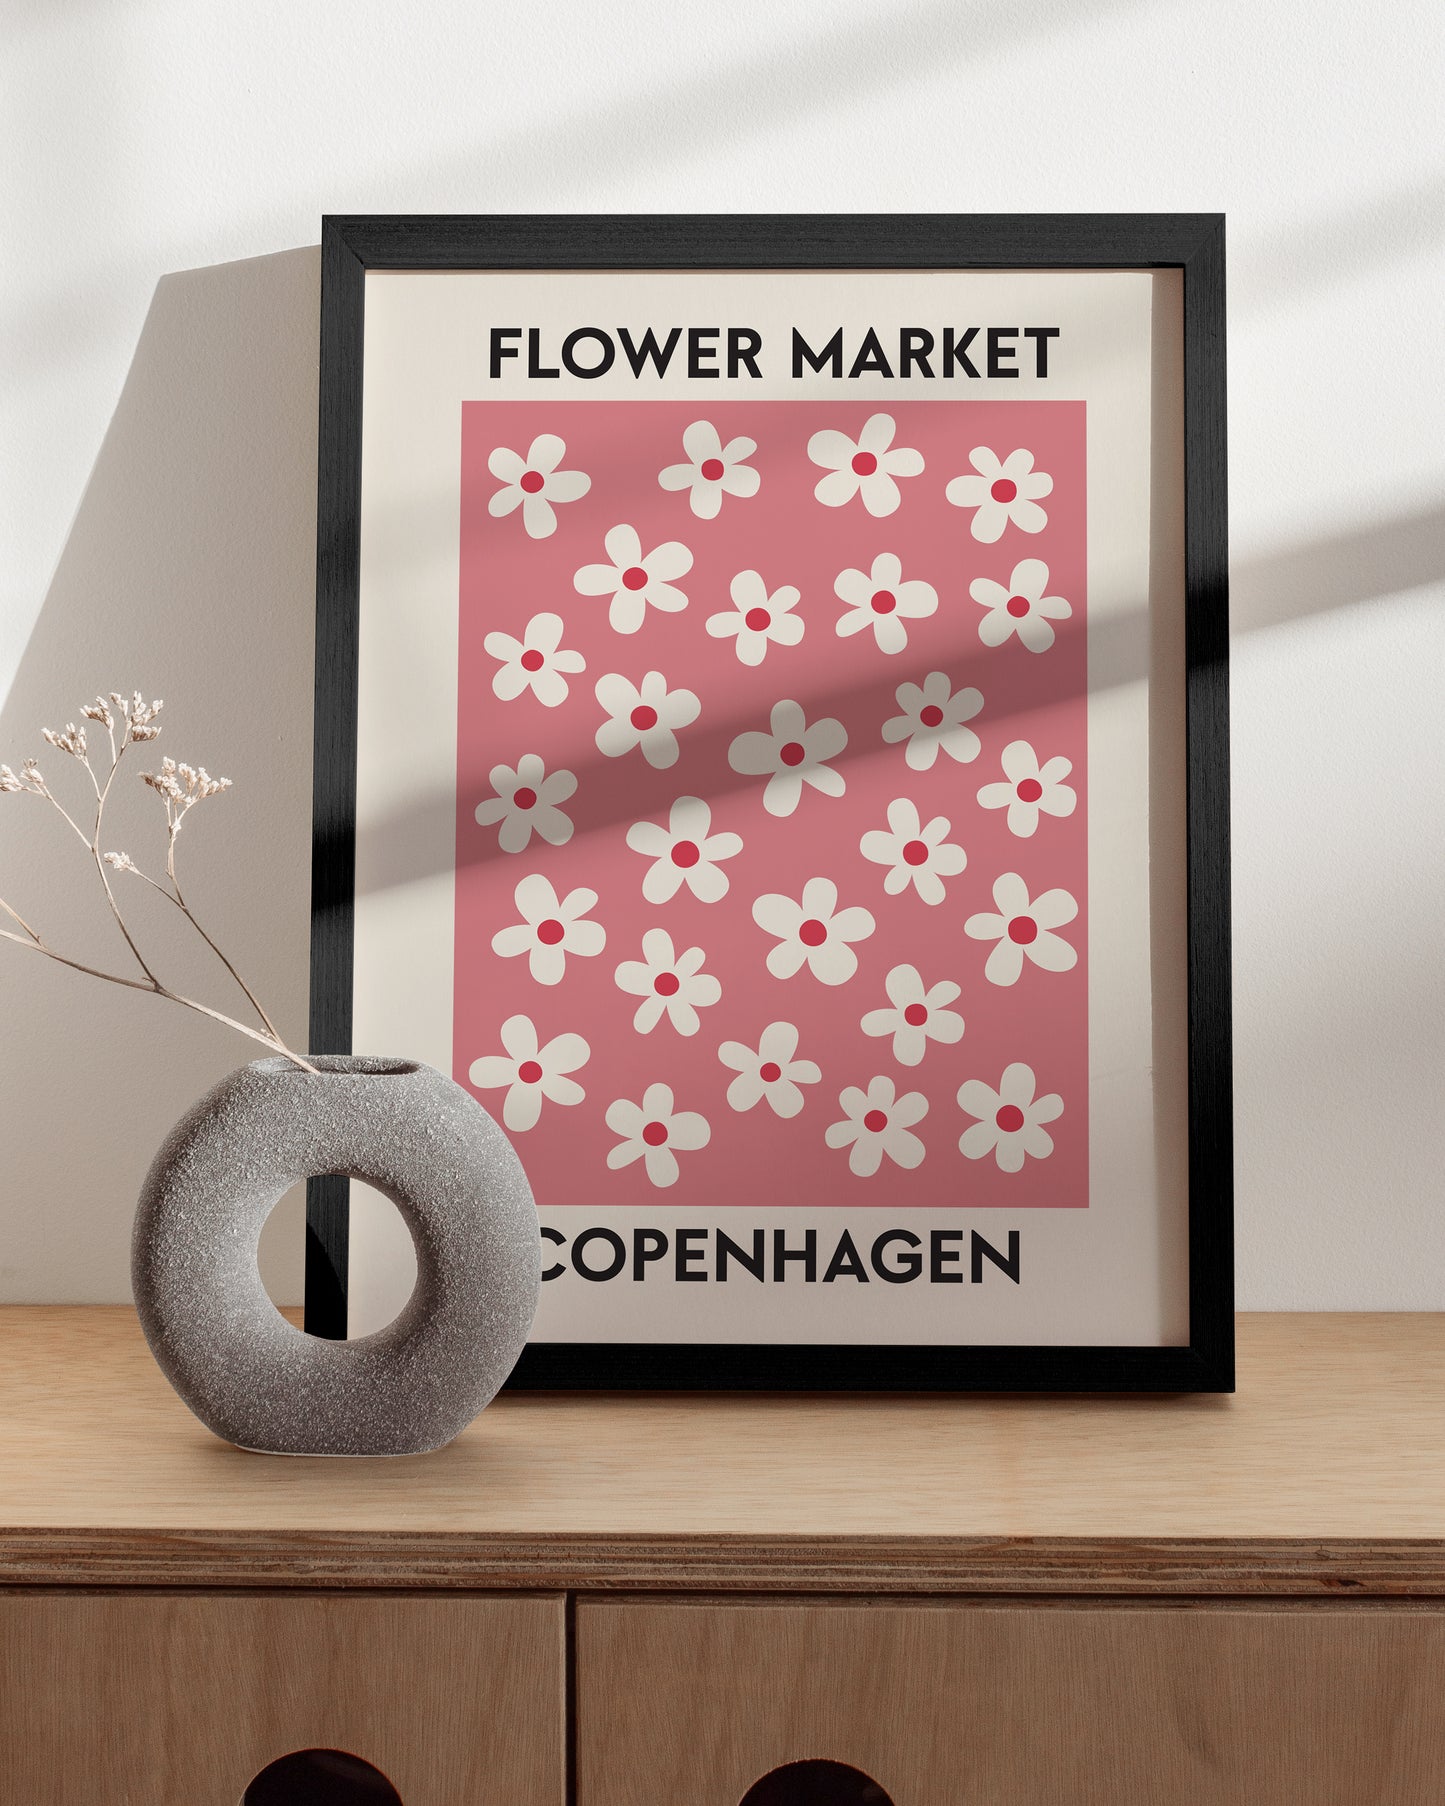 Flower Market Copenhagen and Hues